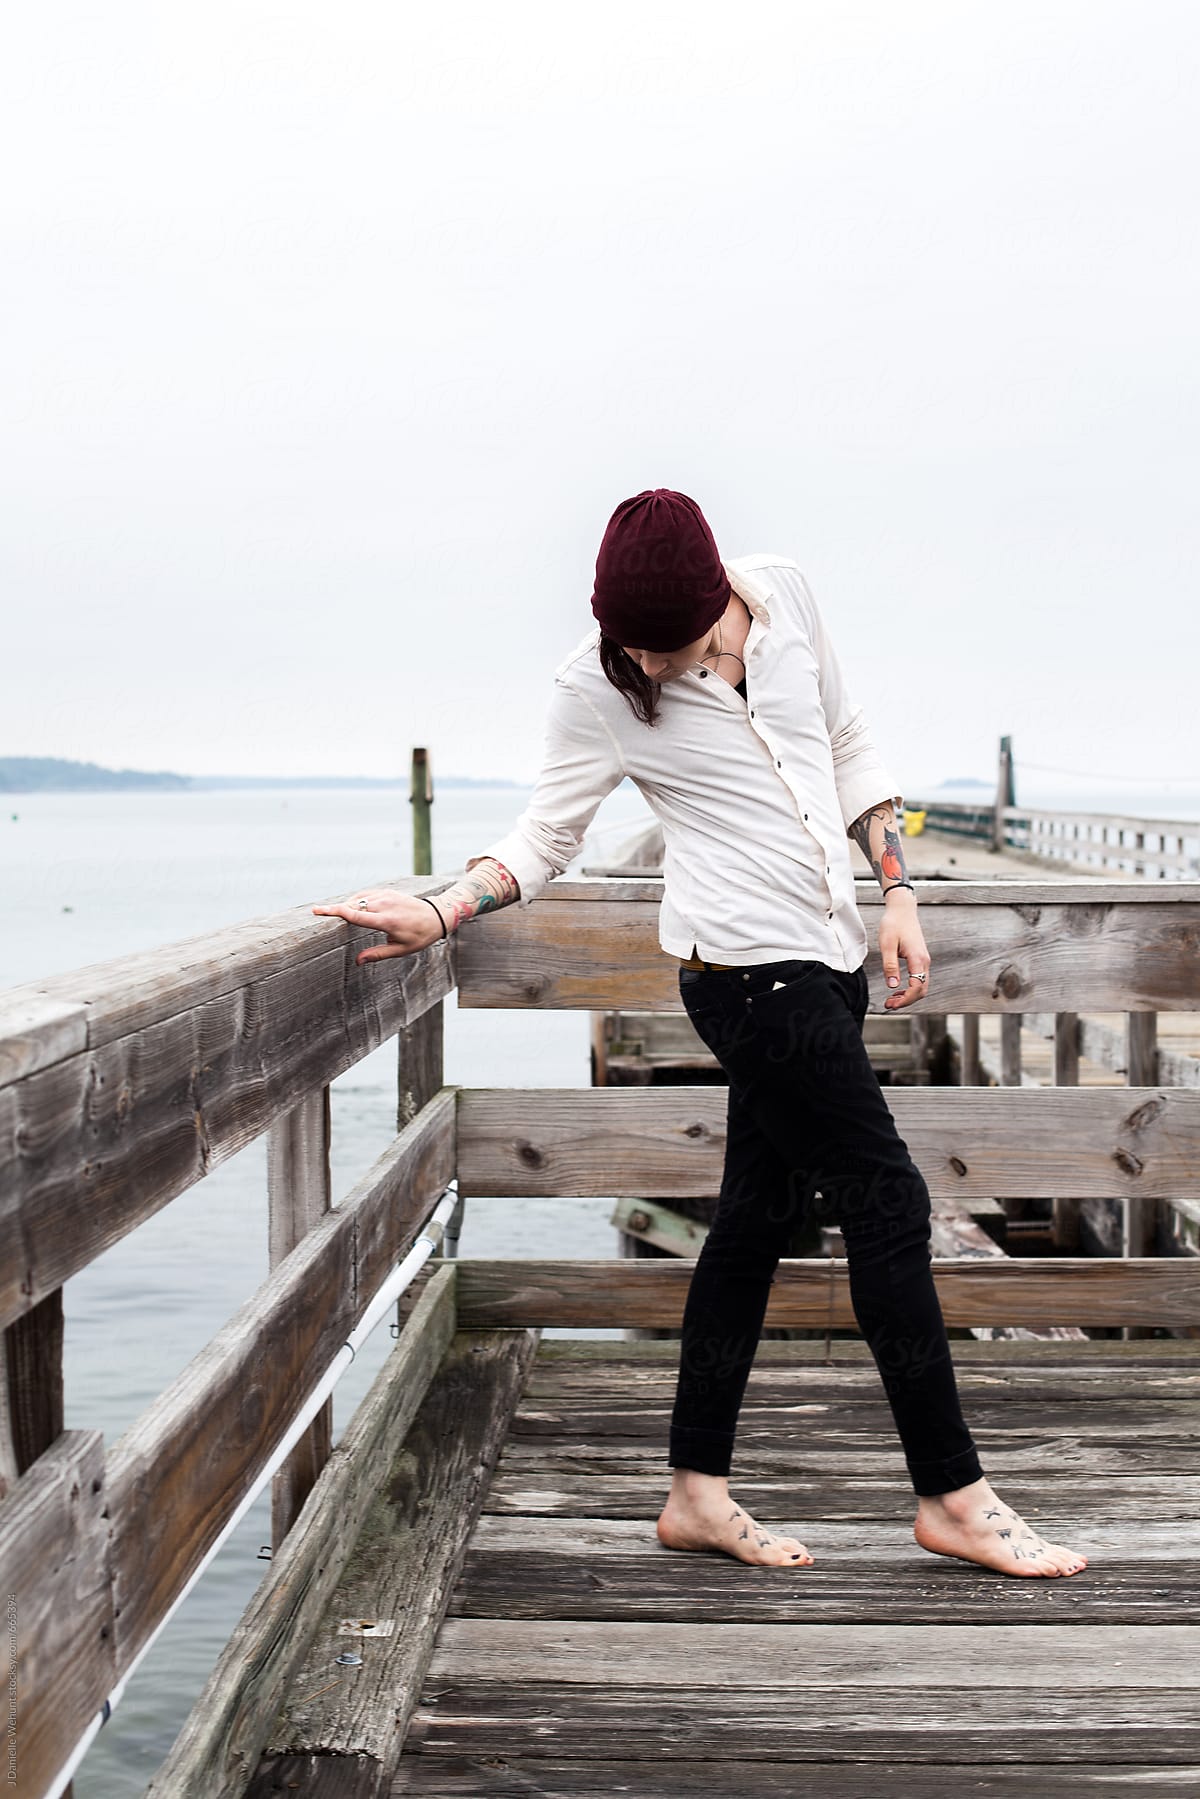 Portrait of a gender neutral, gender fluid person person standing on pier